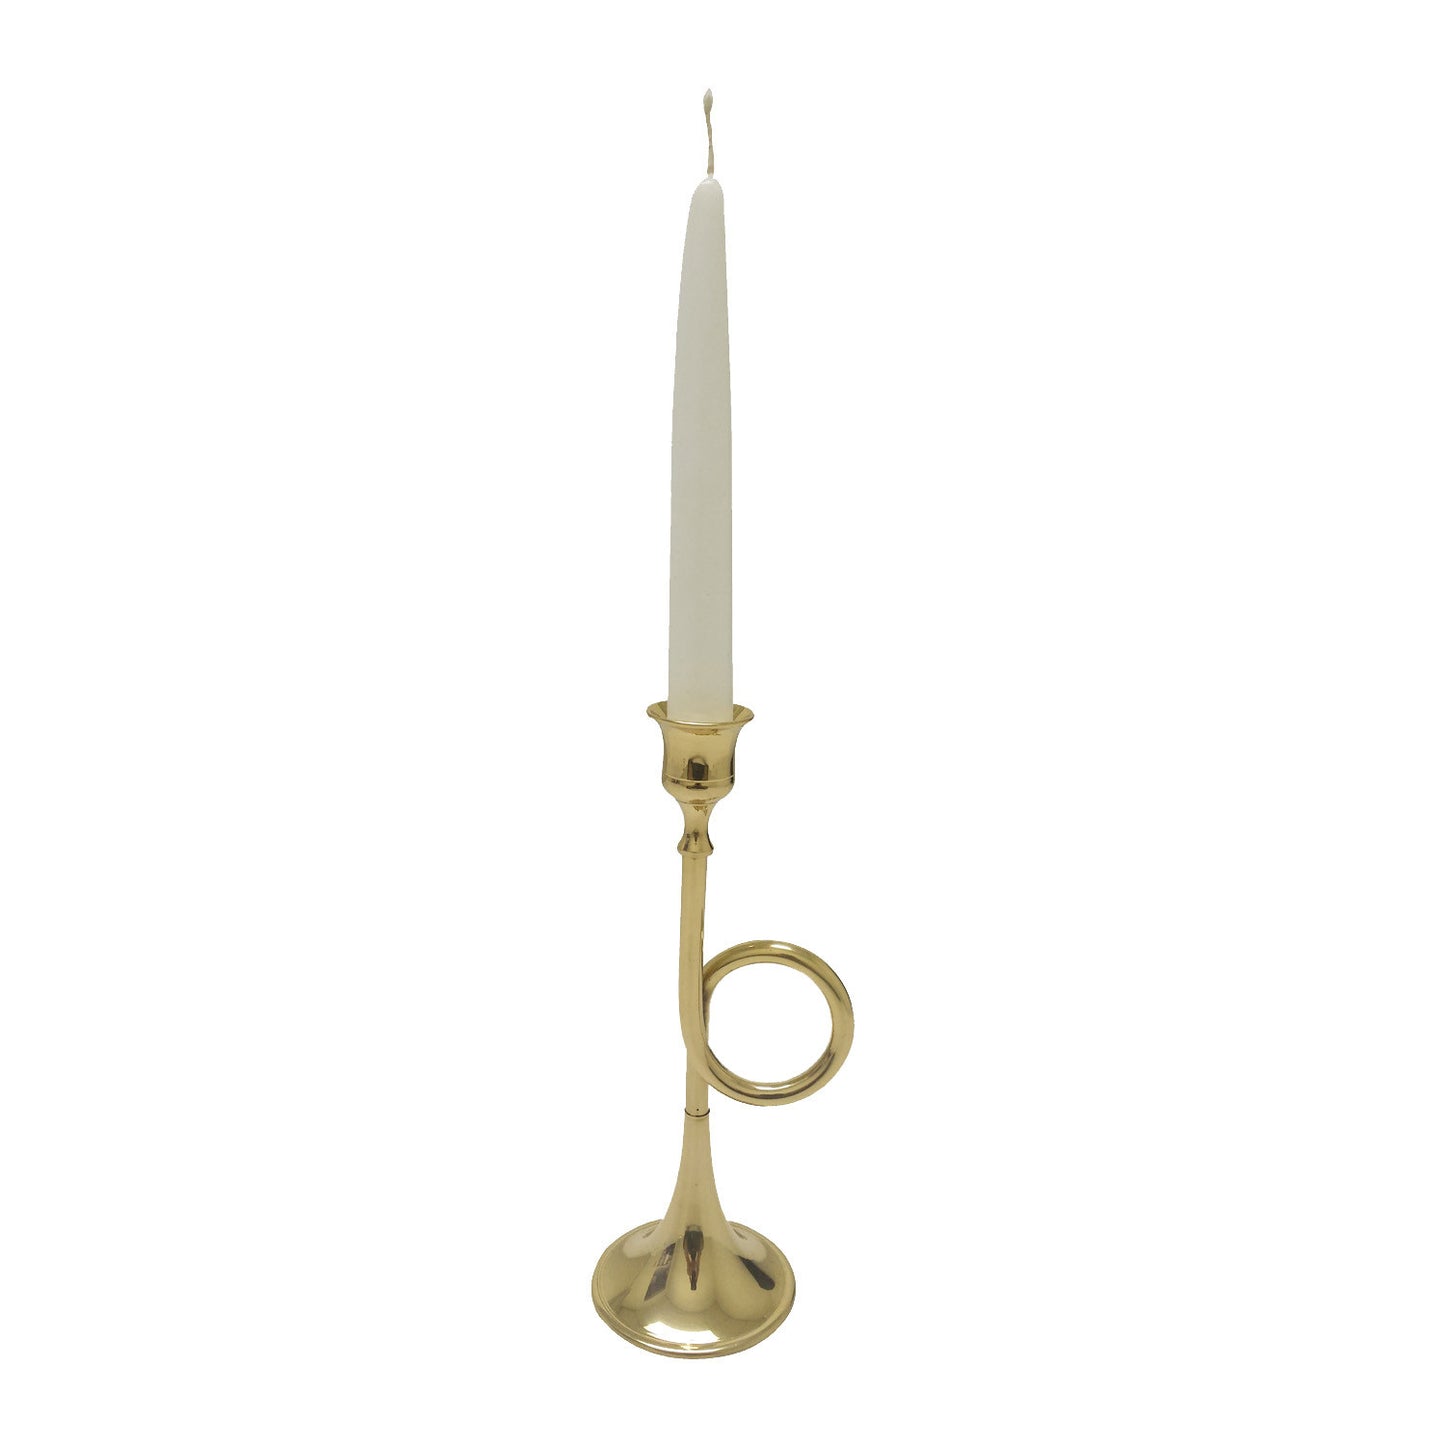 GiftBay 1009 Candlestick Holder, Brass Polished Finish, 8.5"h